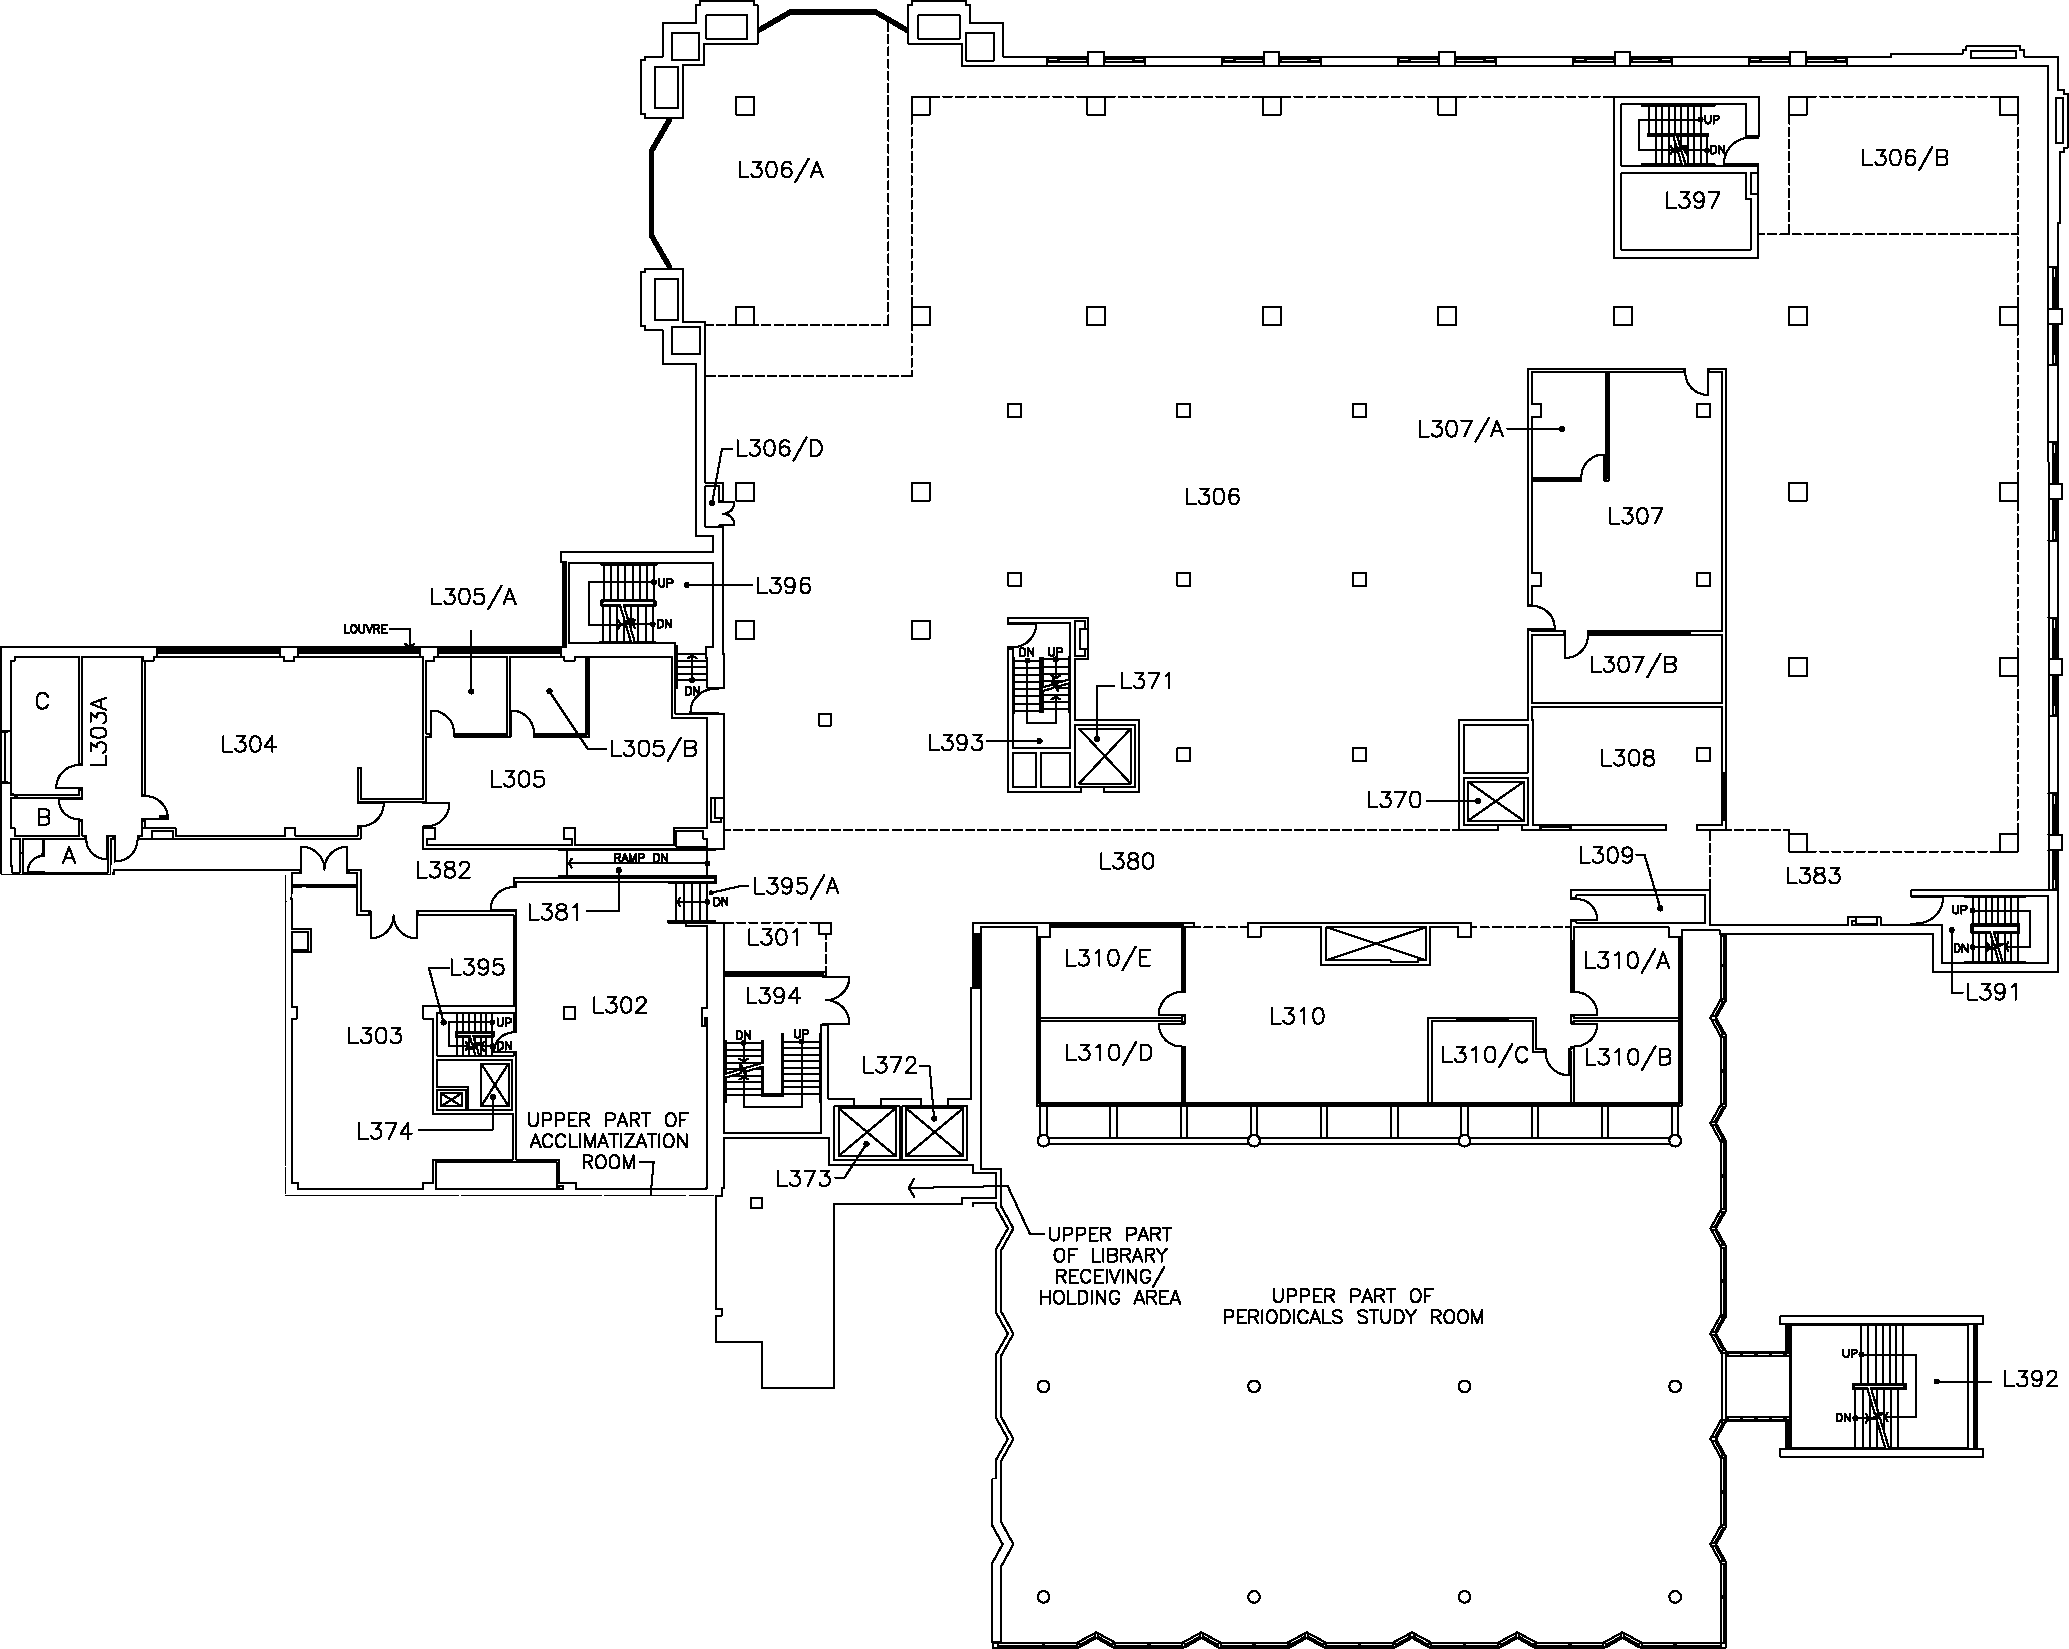 Mills Library - Third Floor Map